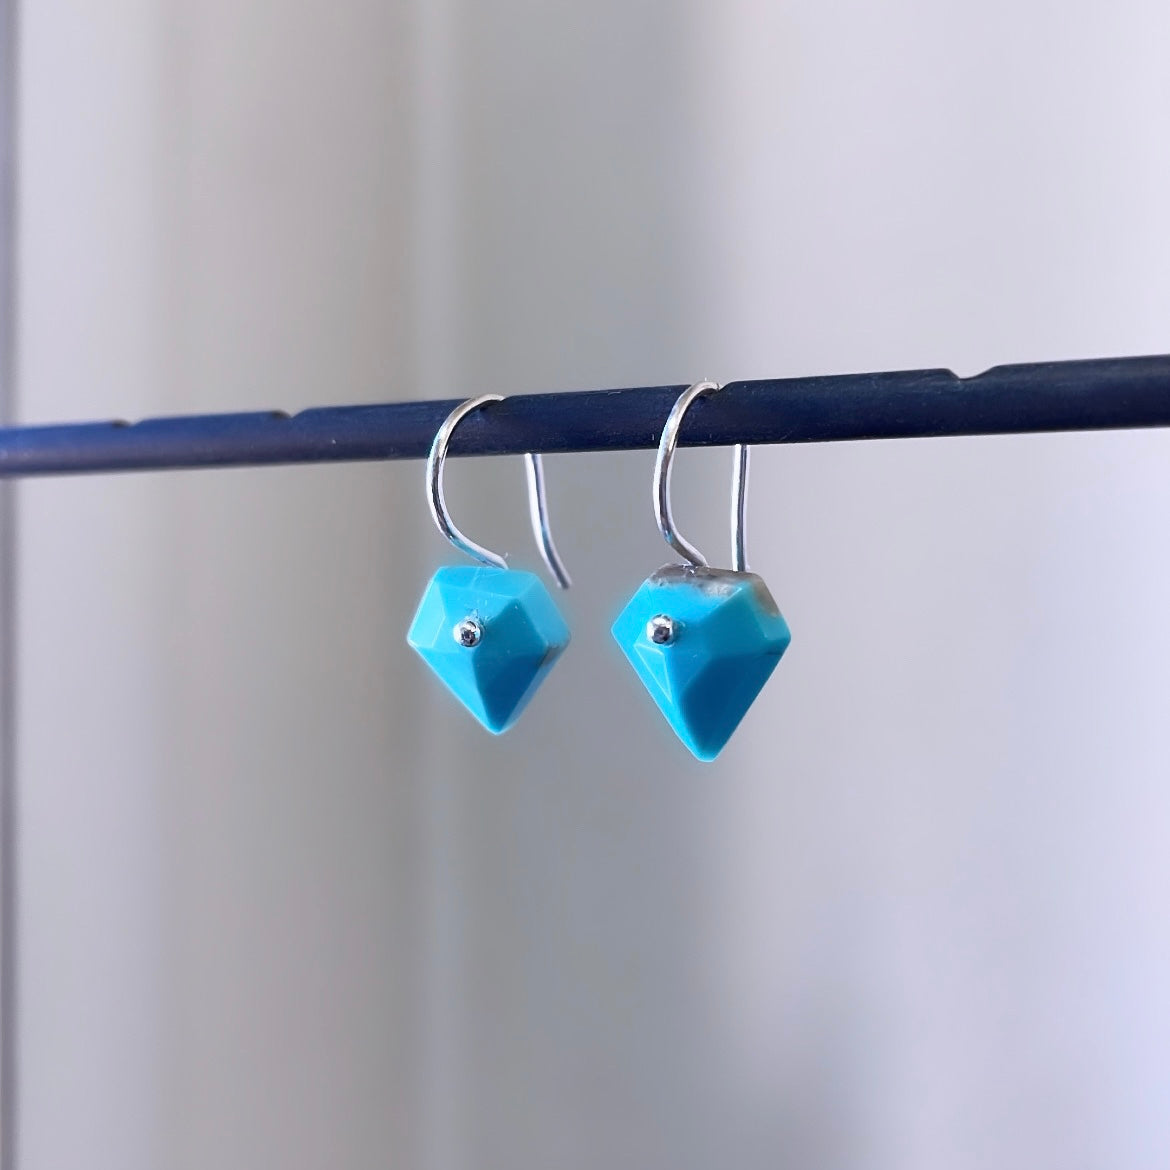 Mini earrings in faceted turquoise-serena kojimoto studio